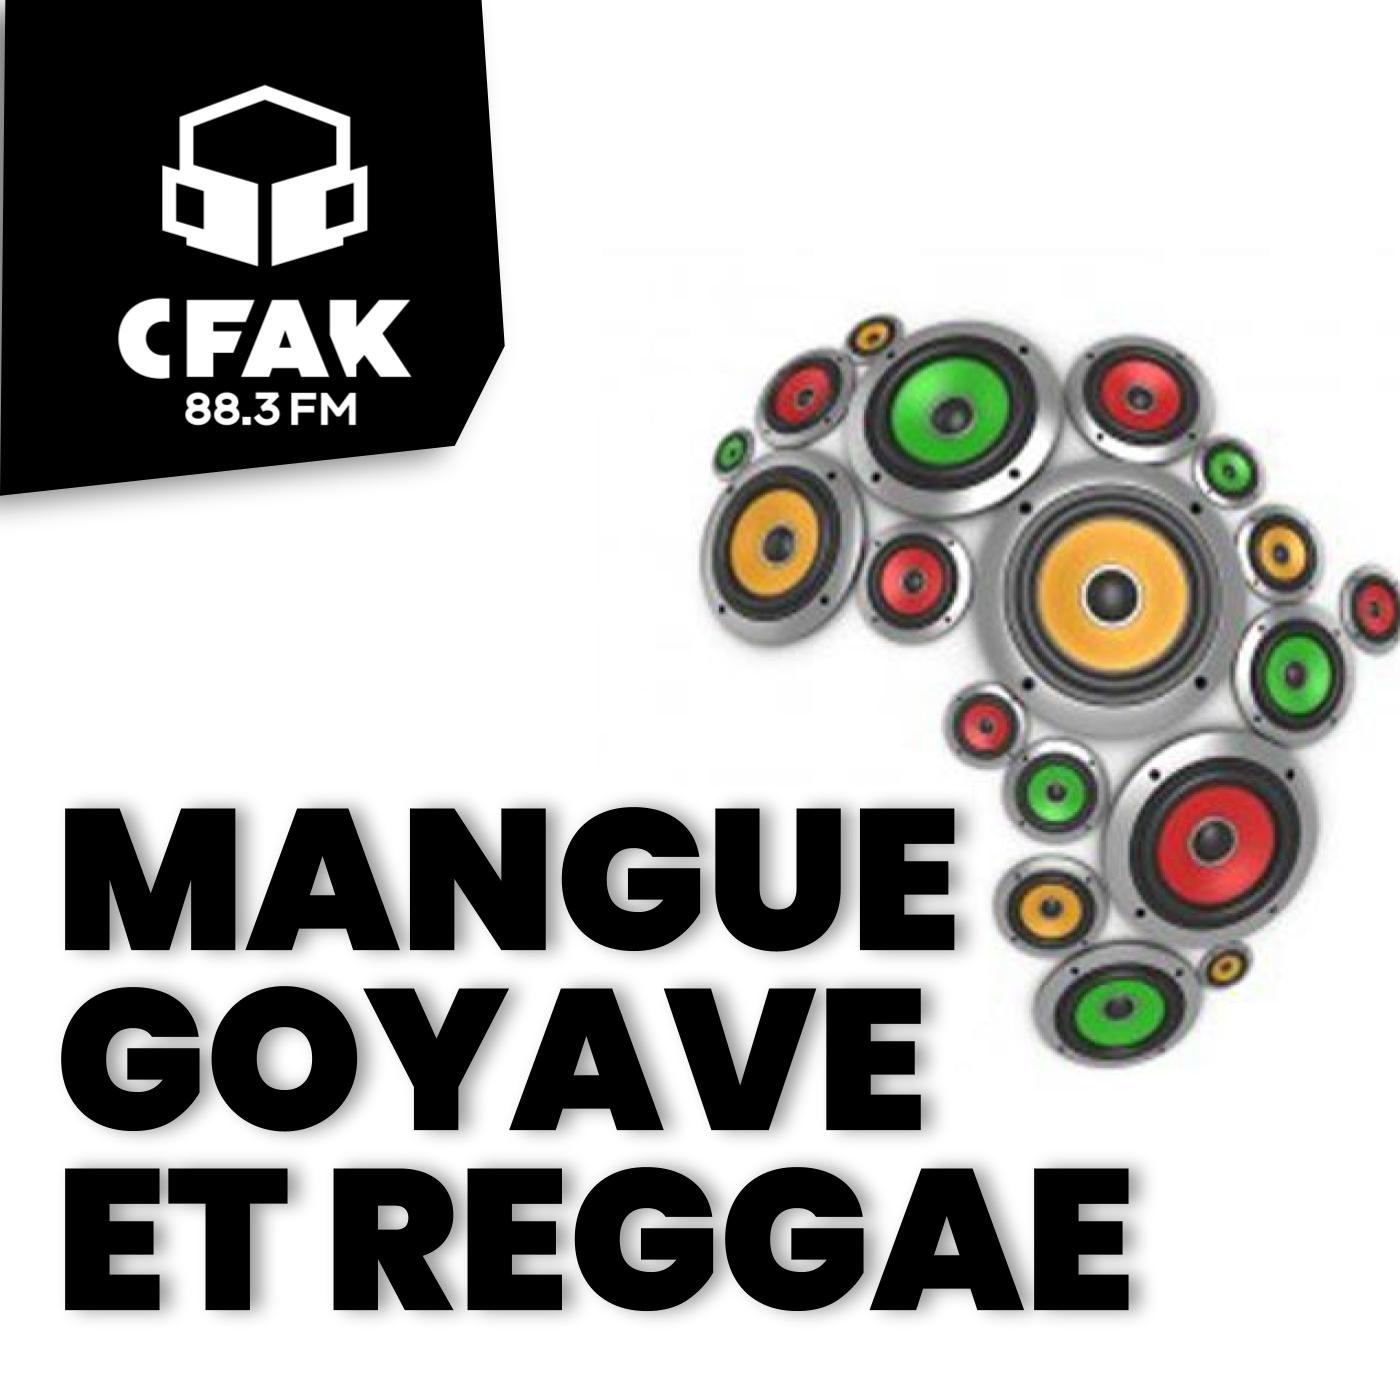 Mangue, Goyave et Reggae - 30 juillet 2021